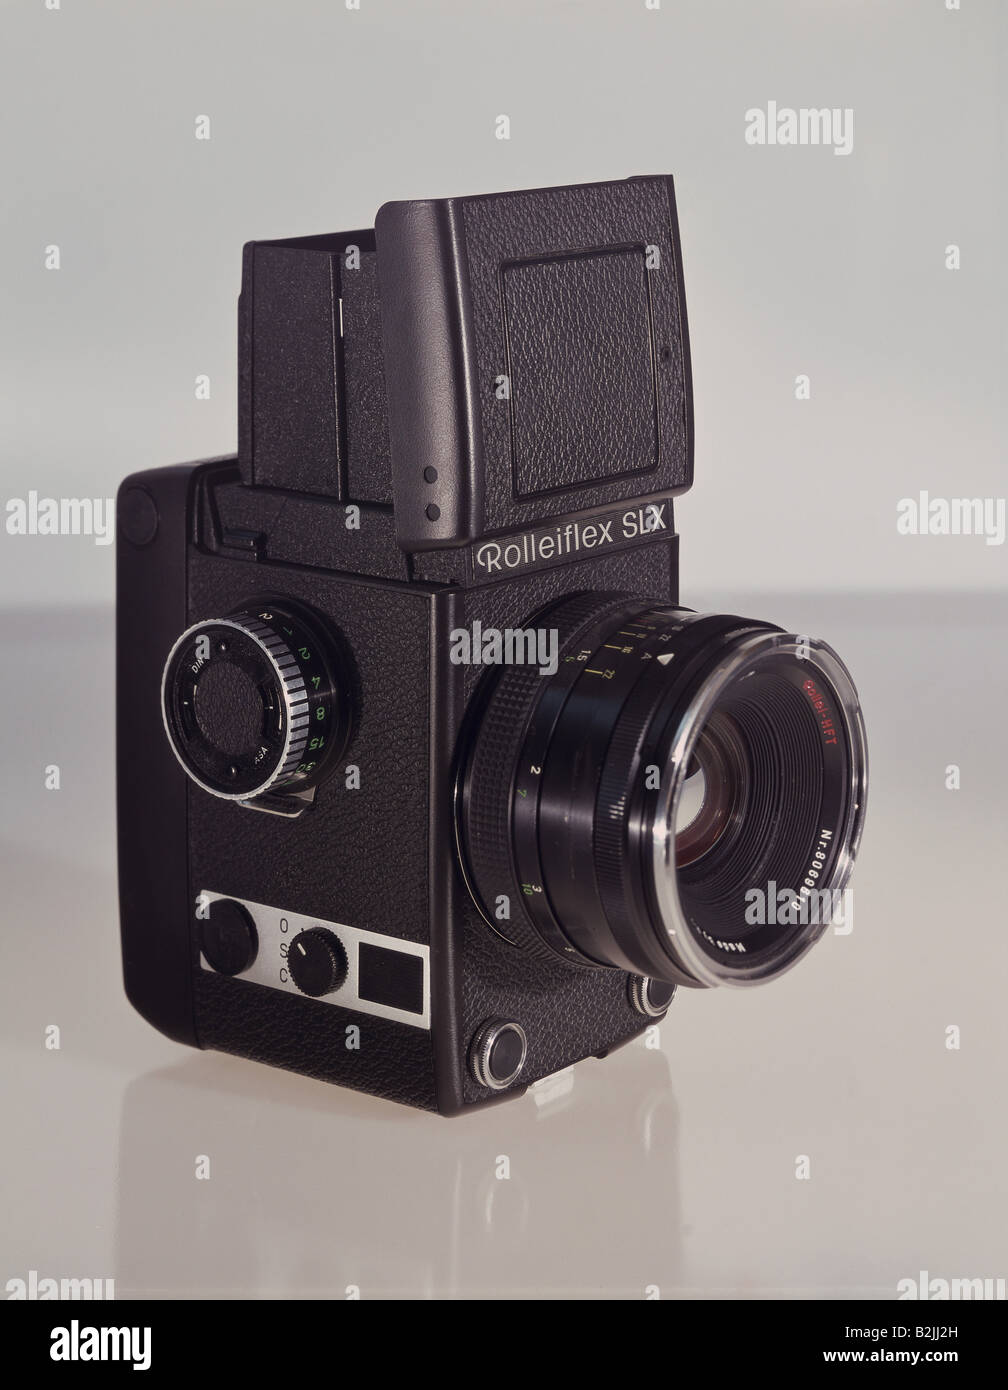 photography, cameras, 6 x 6 reflex camera Rolleiflex SLX, produced by Rollei GmbH Brunswick, Germany, since 1976, Stock Photo